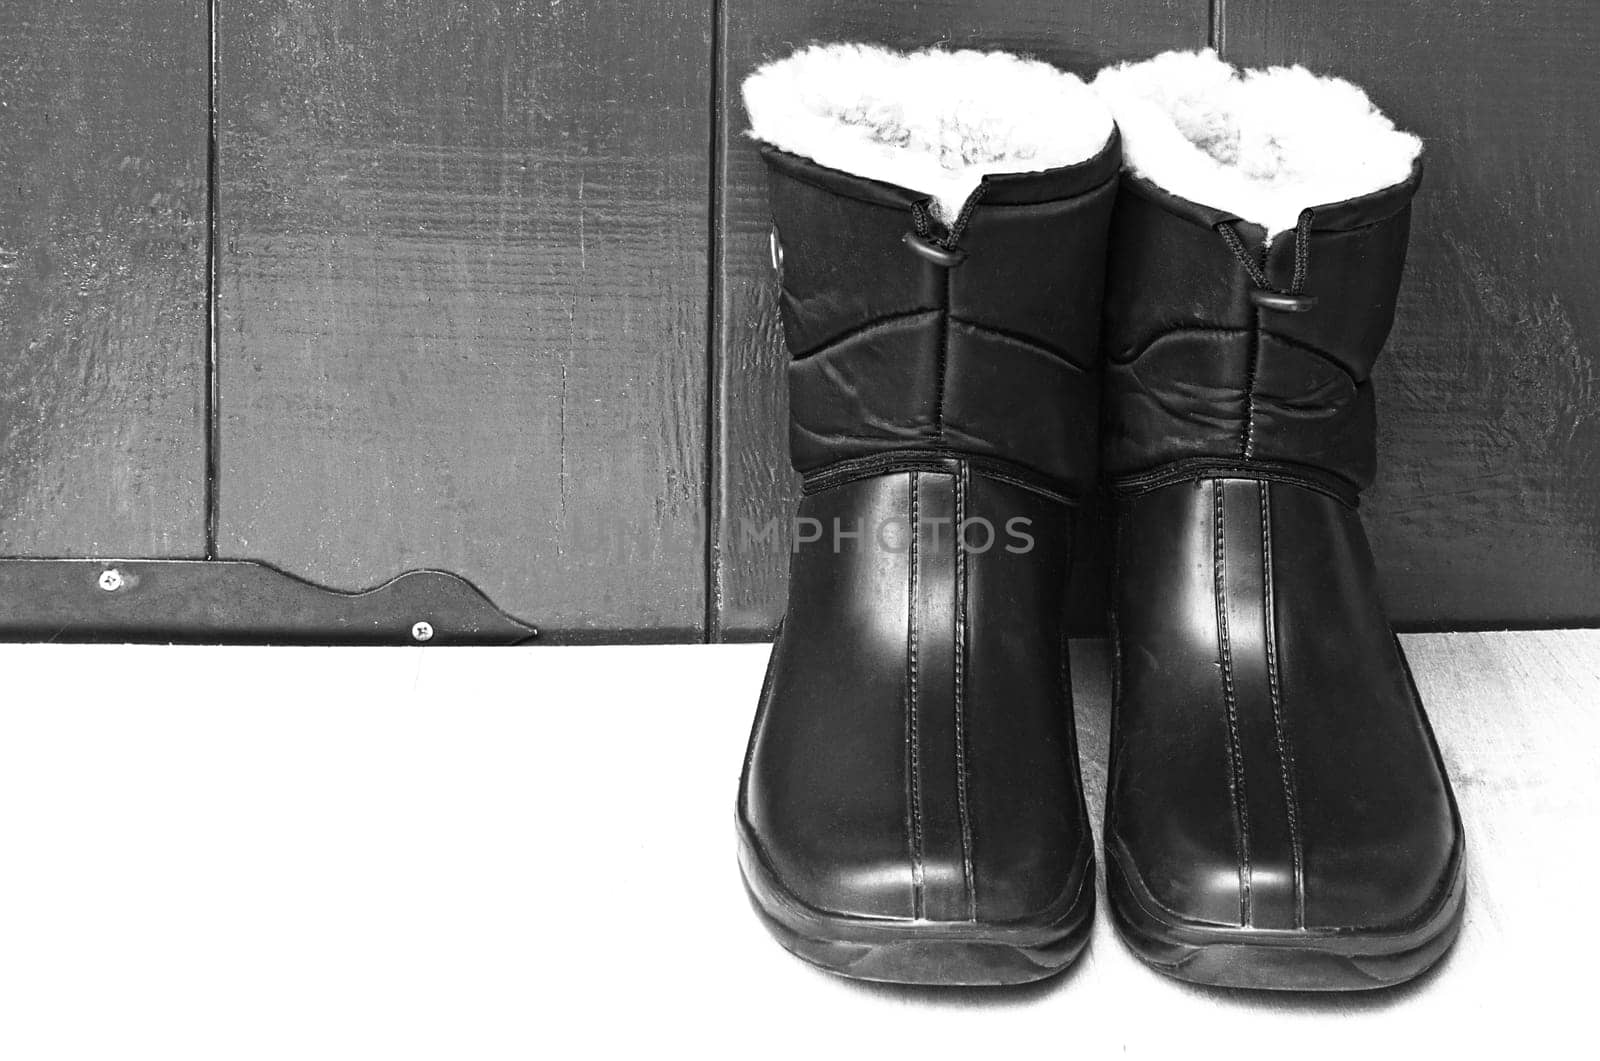 Waterproof men's boots for work. by georgina198